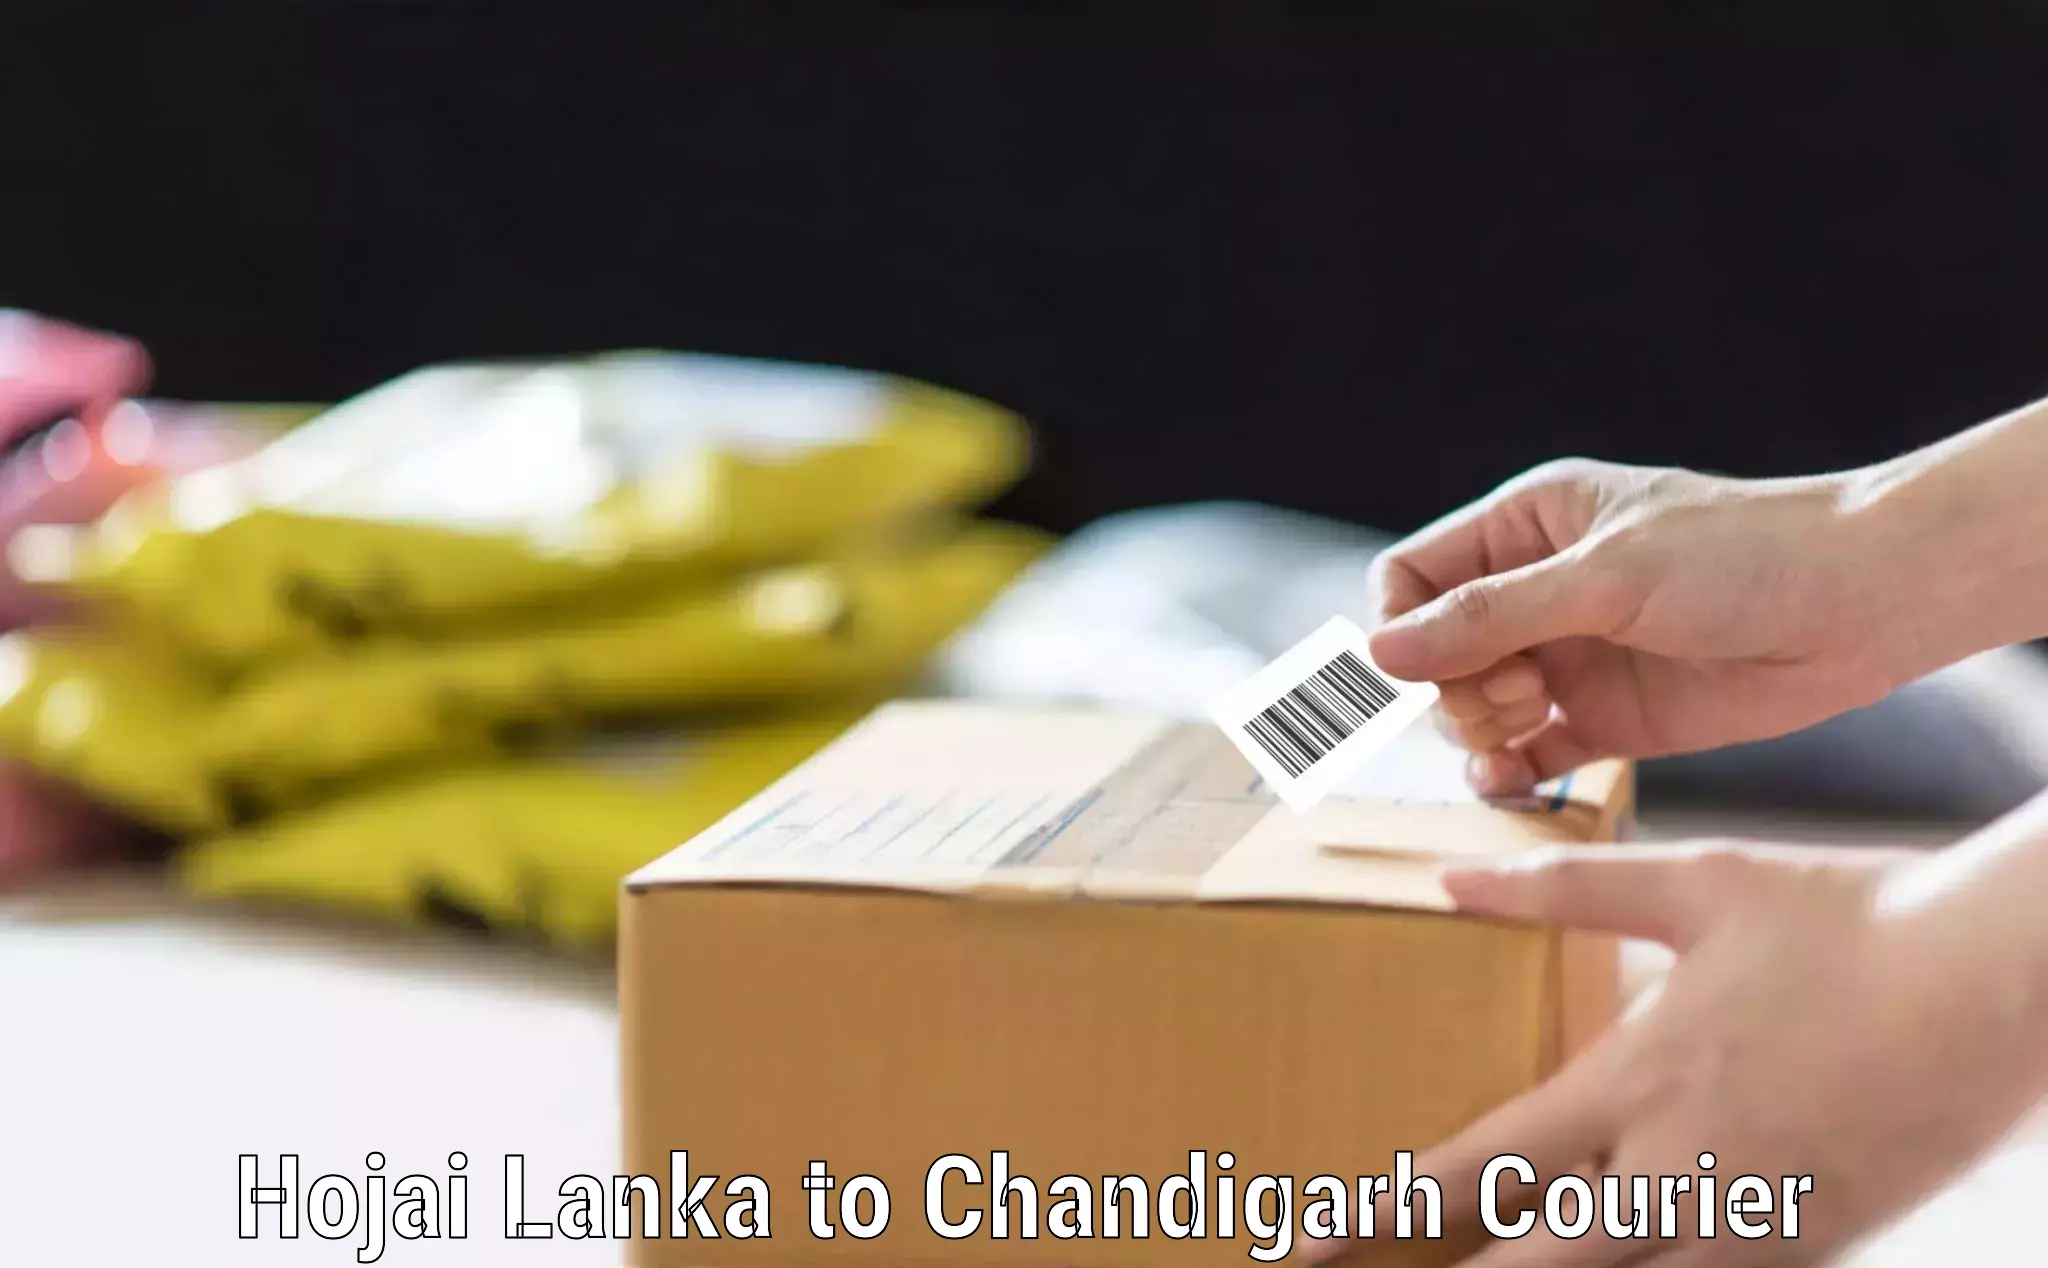 Quick luggage shipment Hojai Lanka to Chandigarh